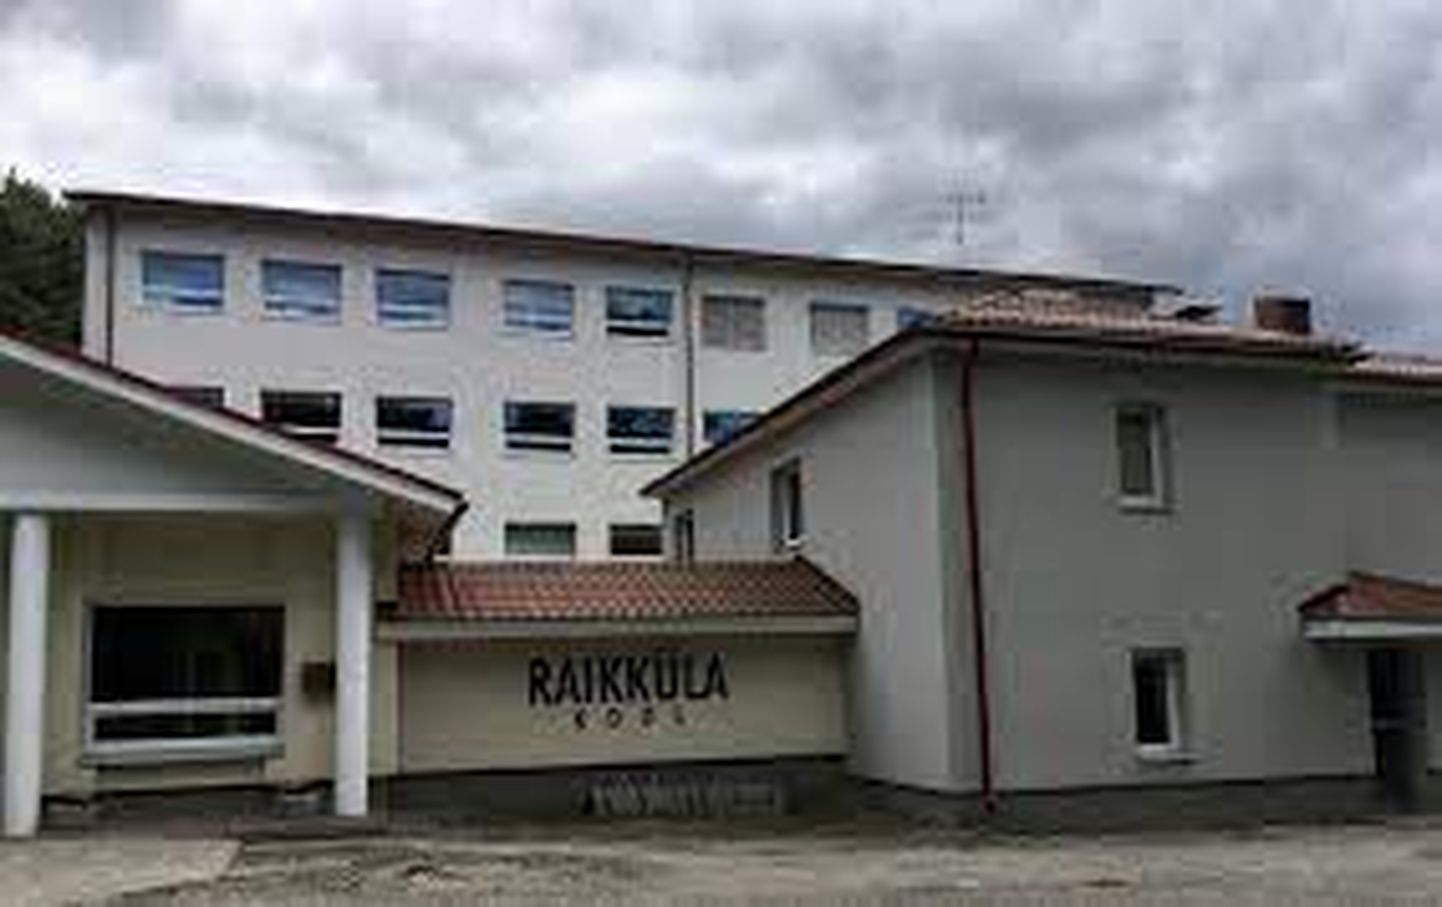 Raikküla kool